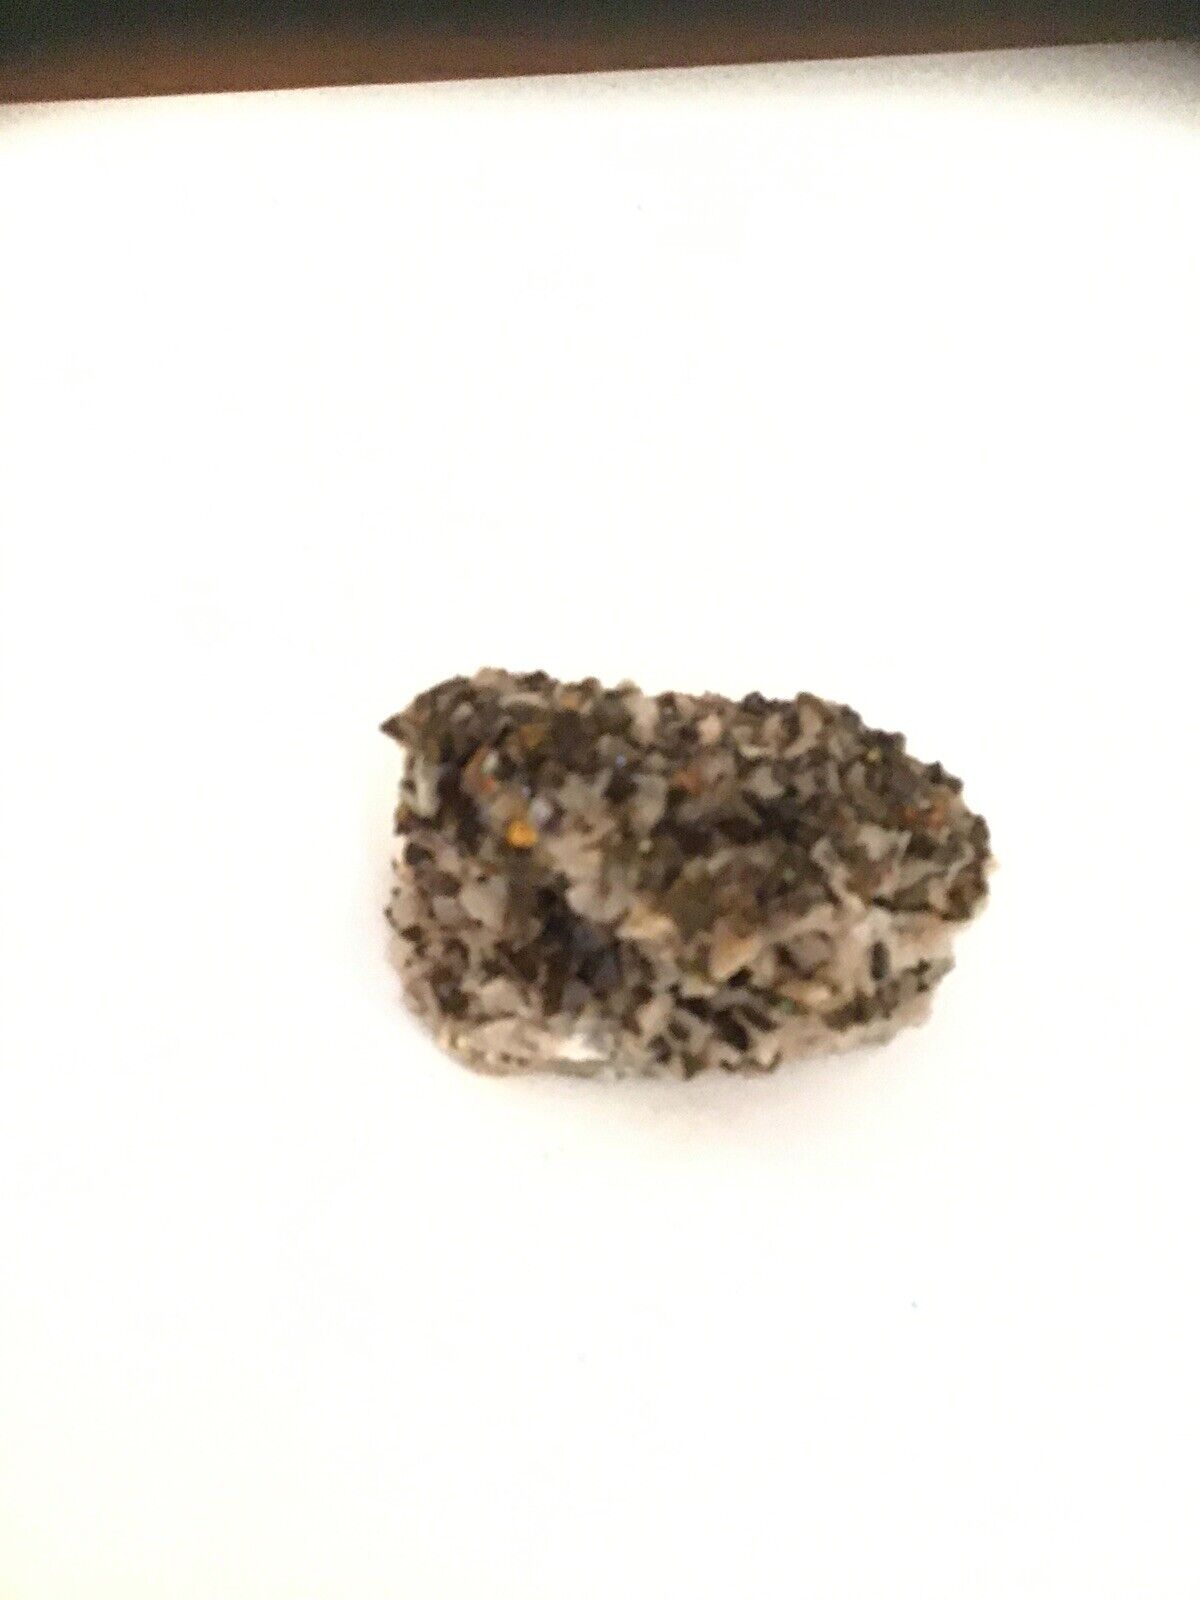 Chalcopyrite Sphalerite On Dolomite 142g Tri-State District Cherokee Co Kansas